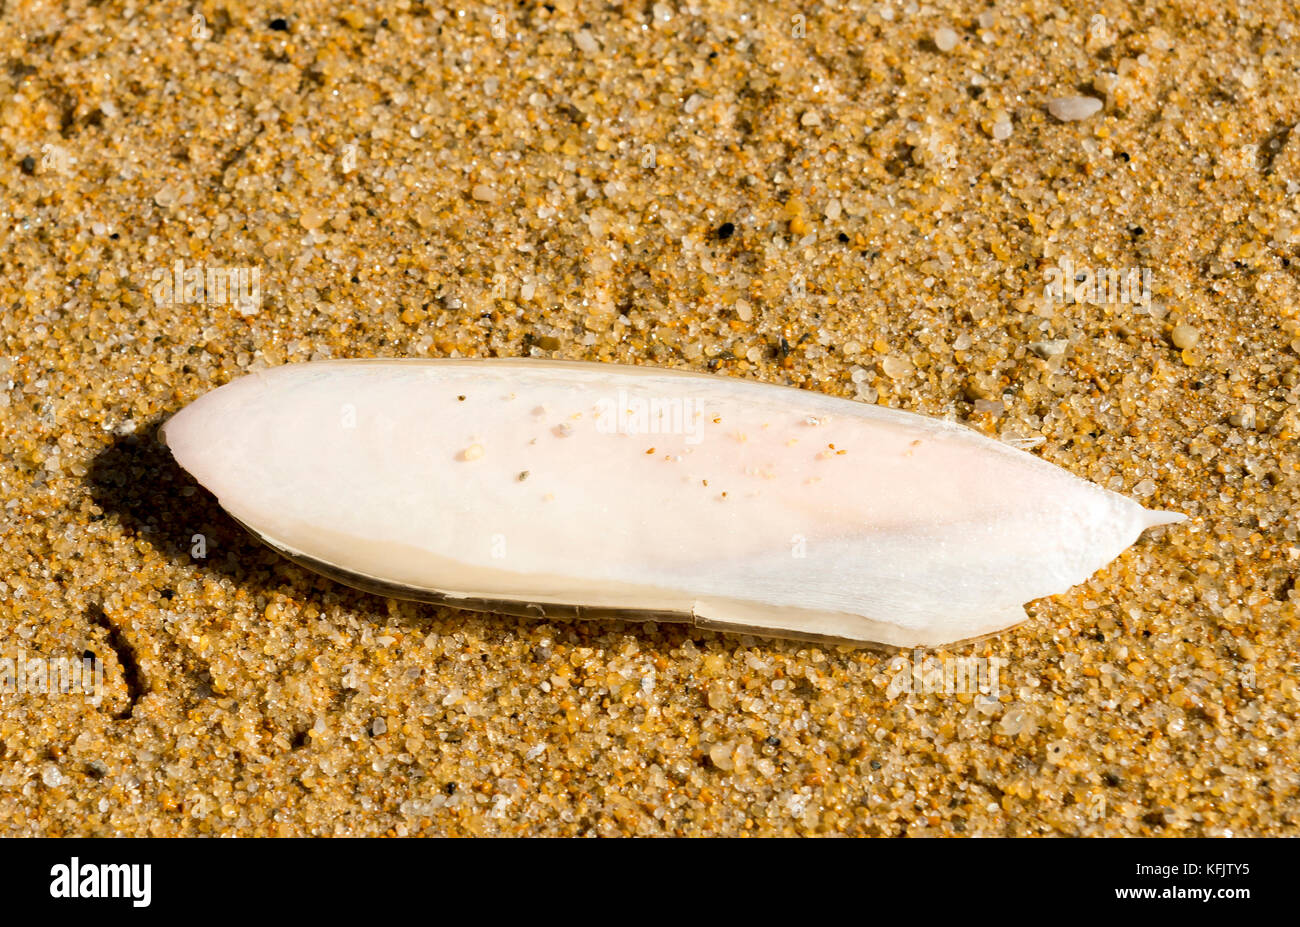 White cuttlefish on beach sand Stock Photo